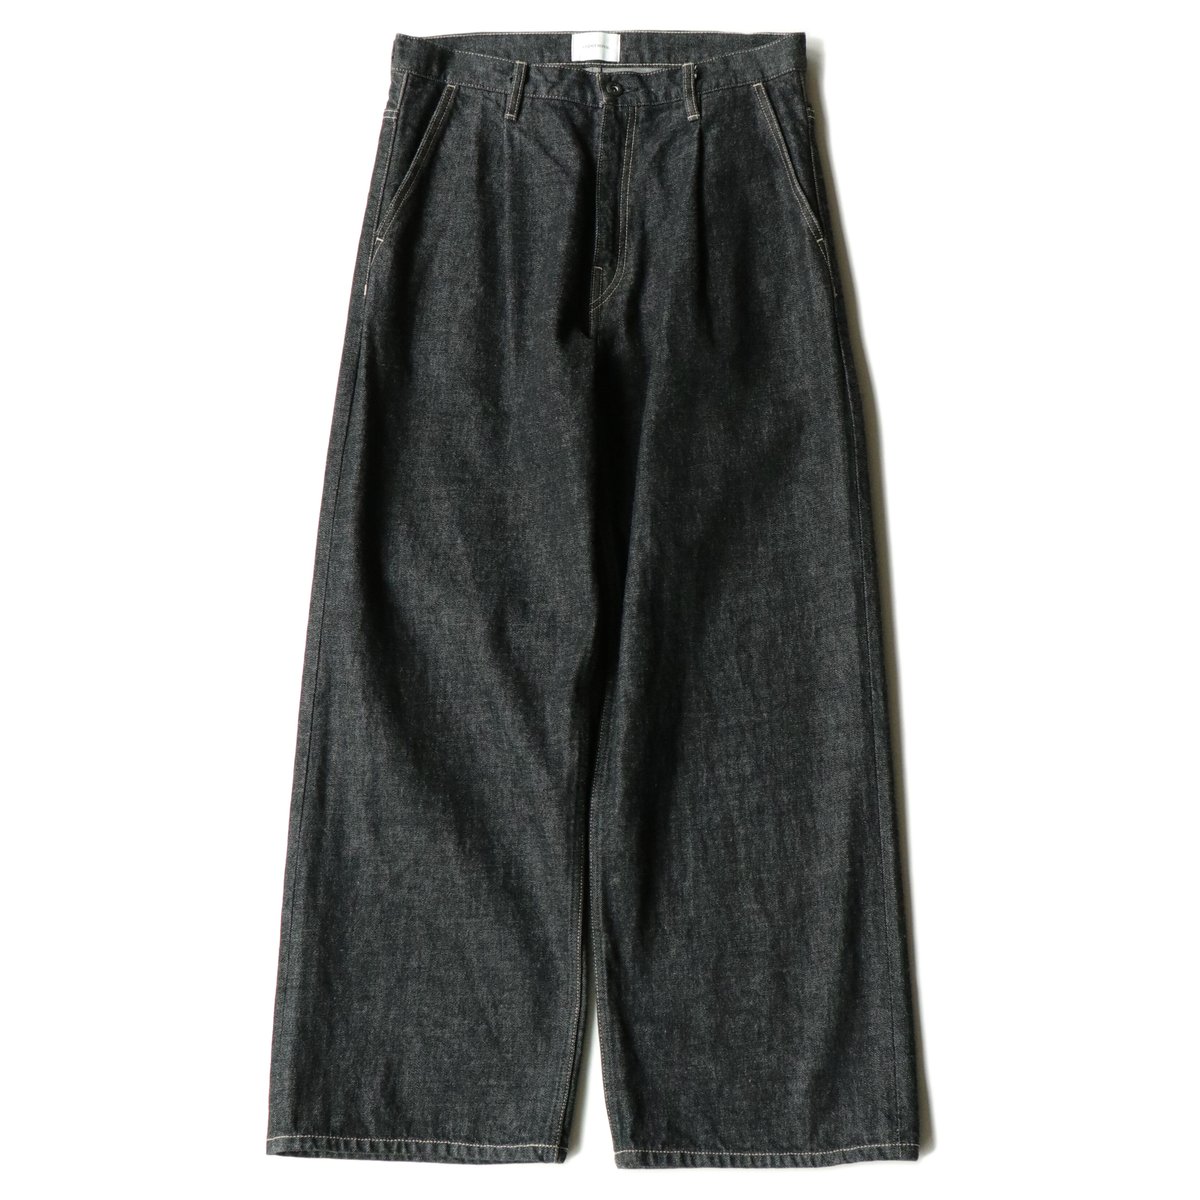 Selvedge wide jeans - One wash / Black | superN...